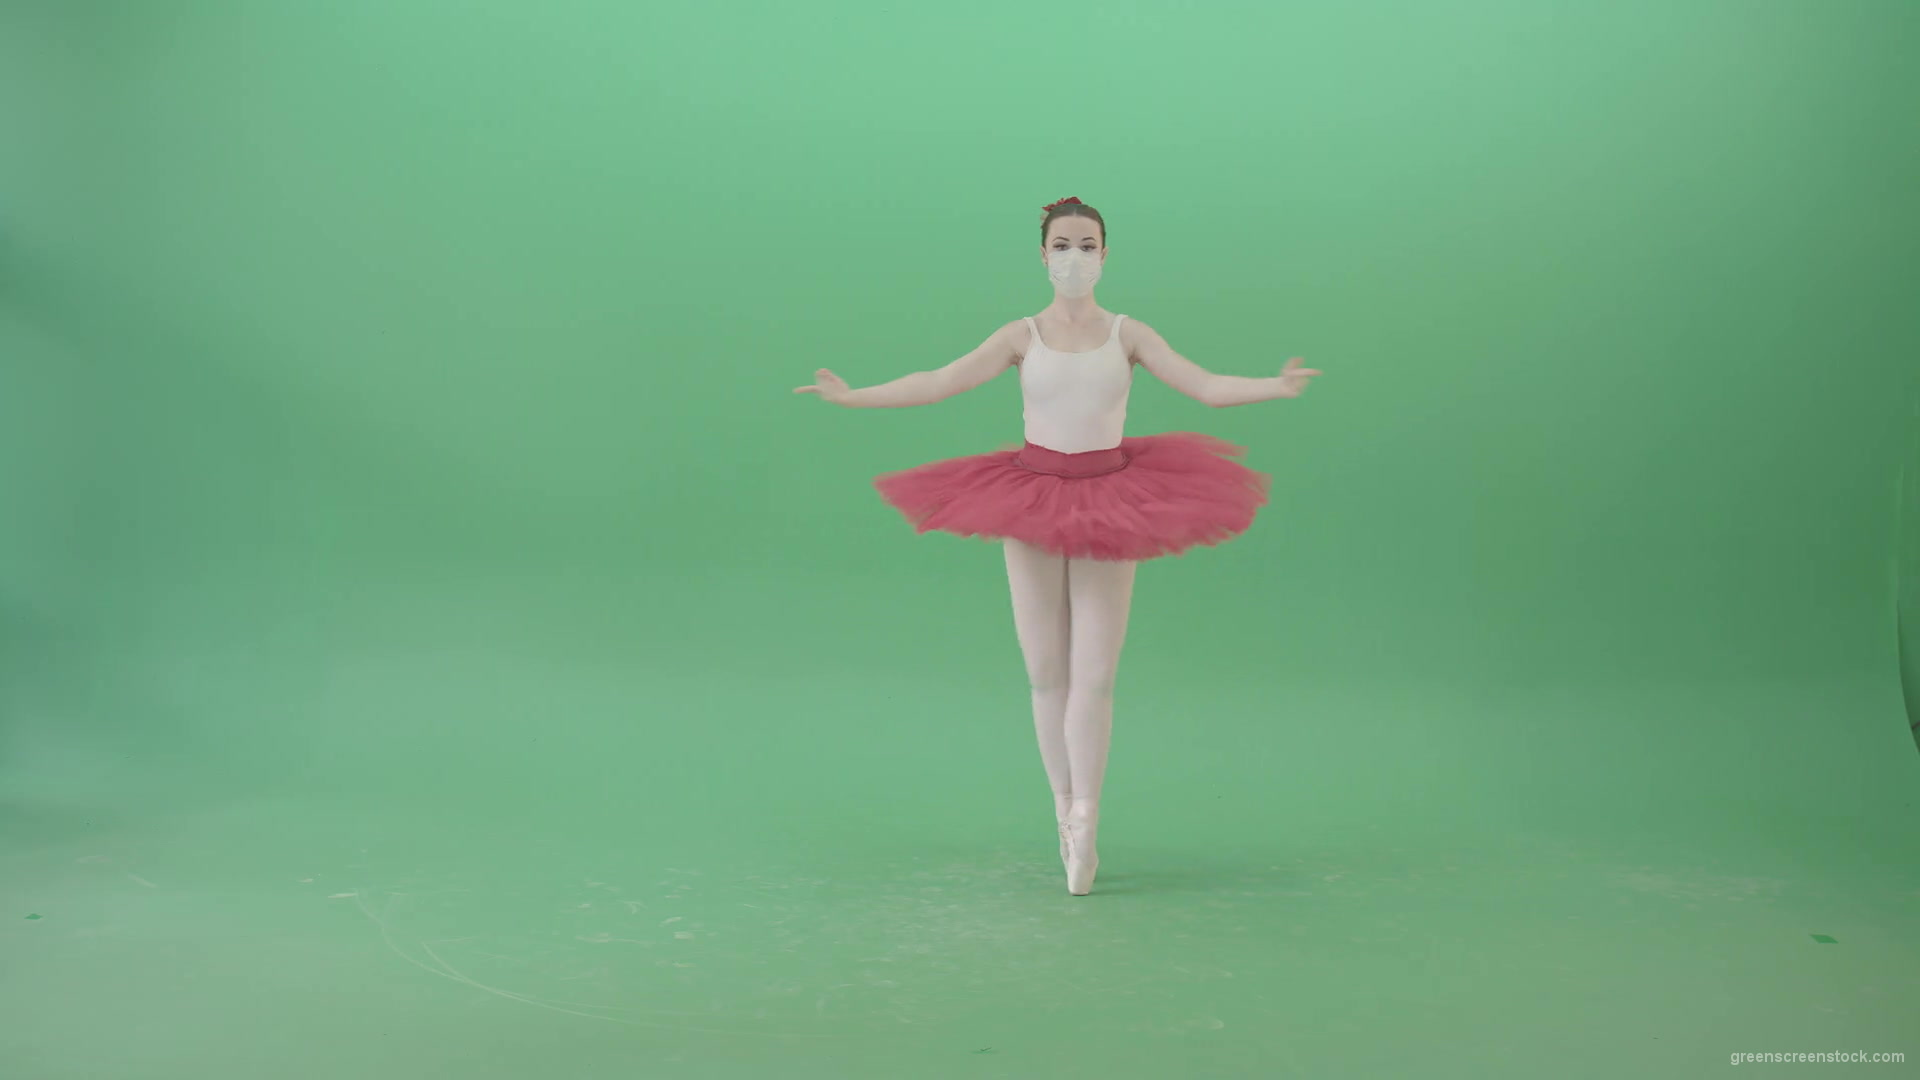 Ballet-Girl-in-Corona-Virus-Mask-Jumping-like-ballerina-isolated-on-green-screen-4K-Video-Footage-1920_006 Green Screen Stock